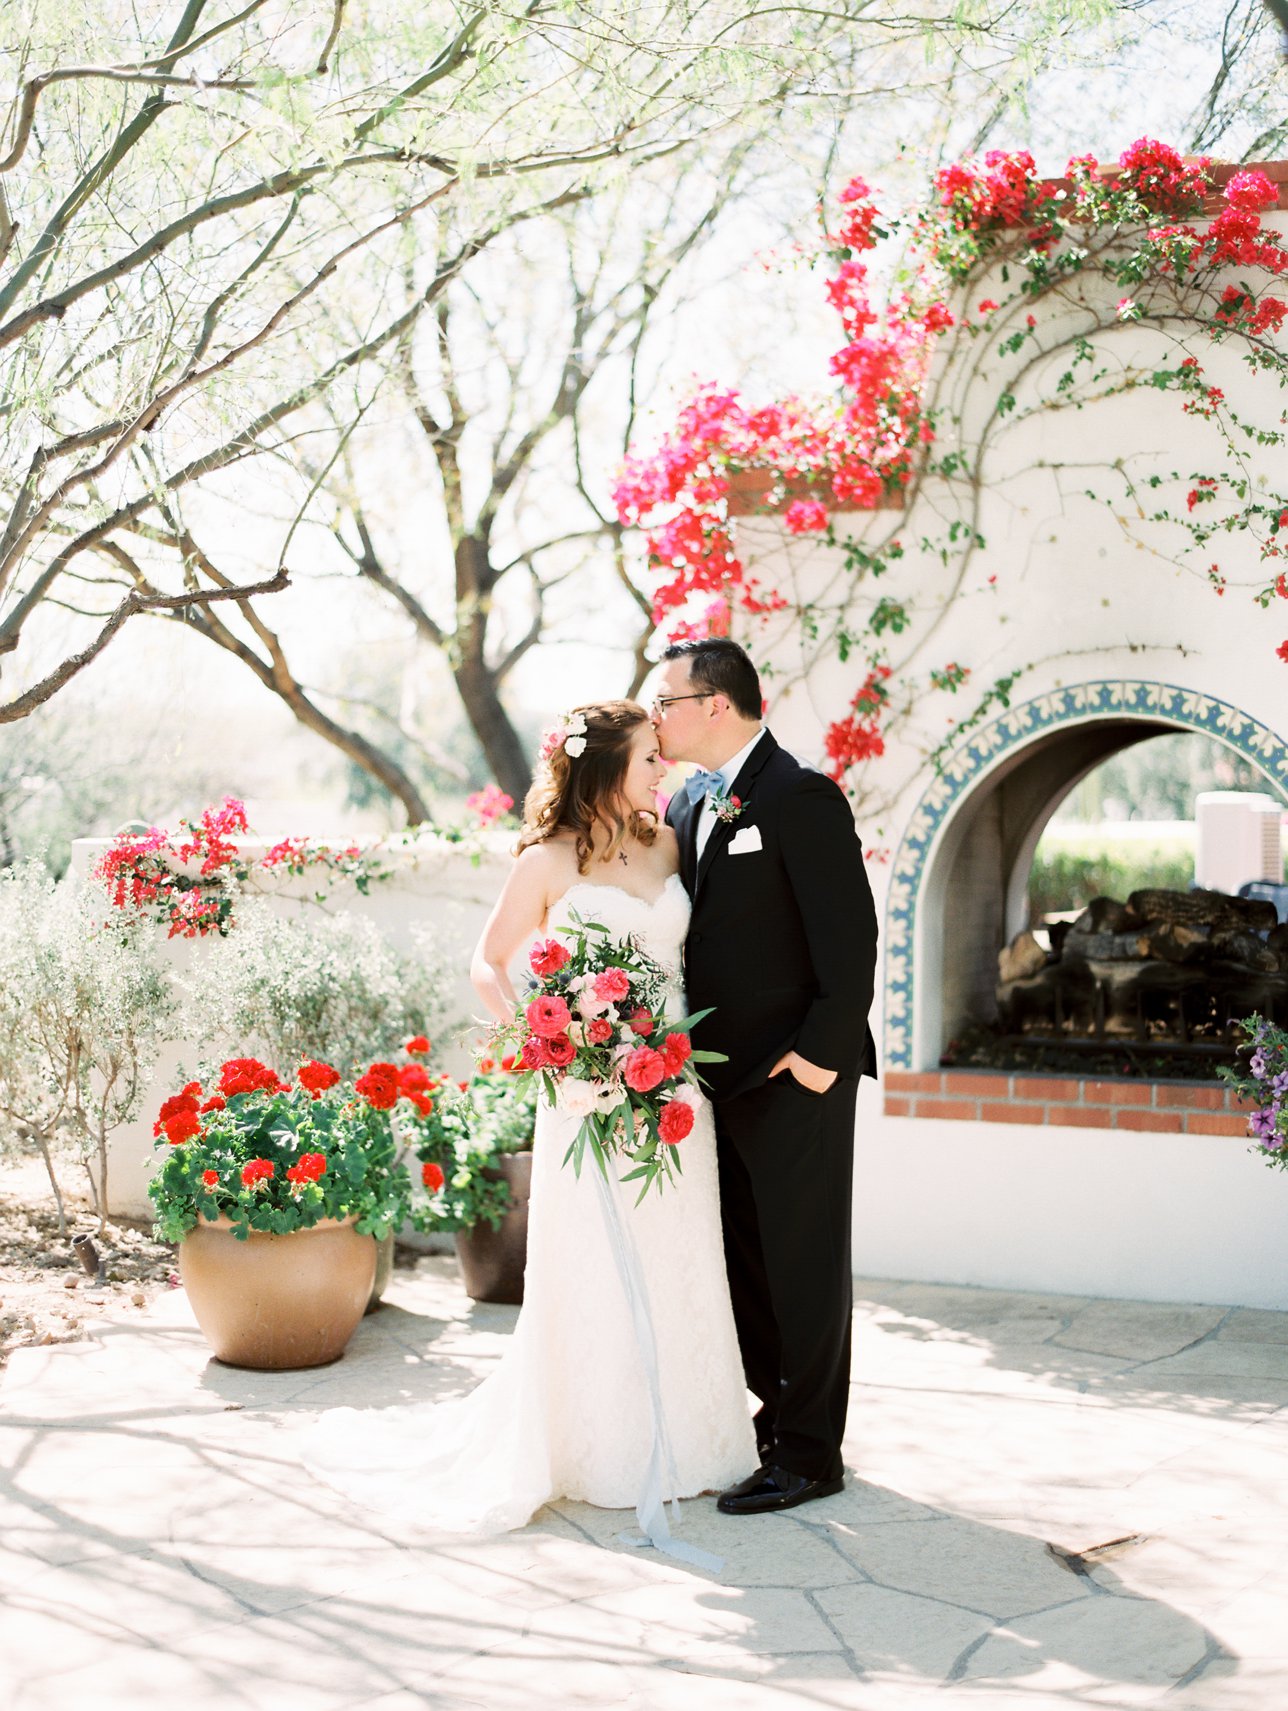 El Chorro wedding photos - Scottsdale Wedding Photographer - Rachel Solomon Photography